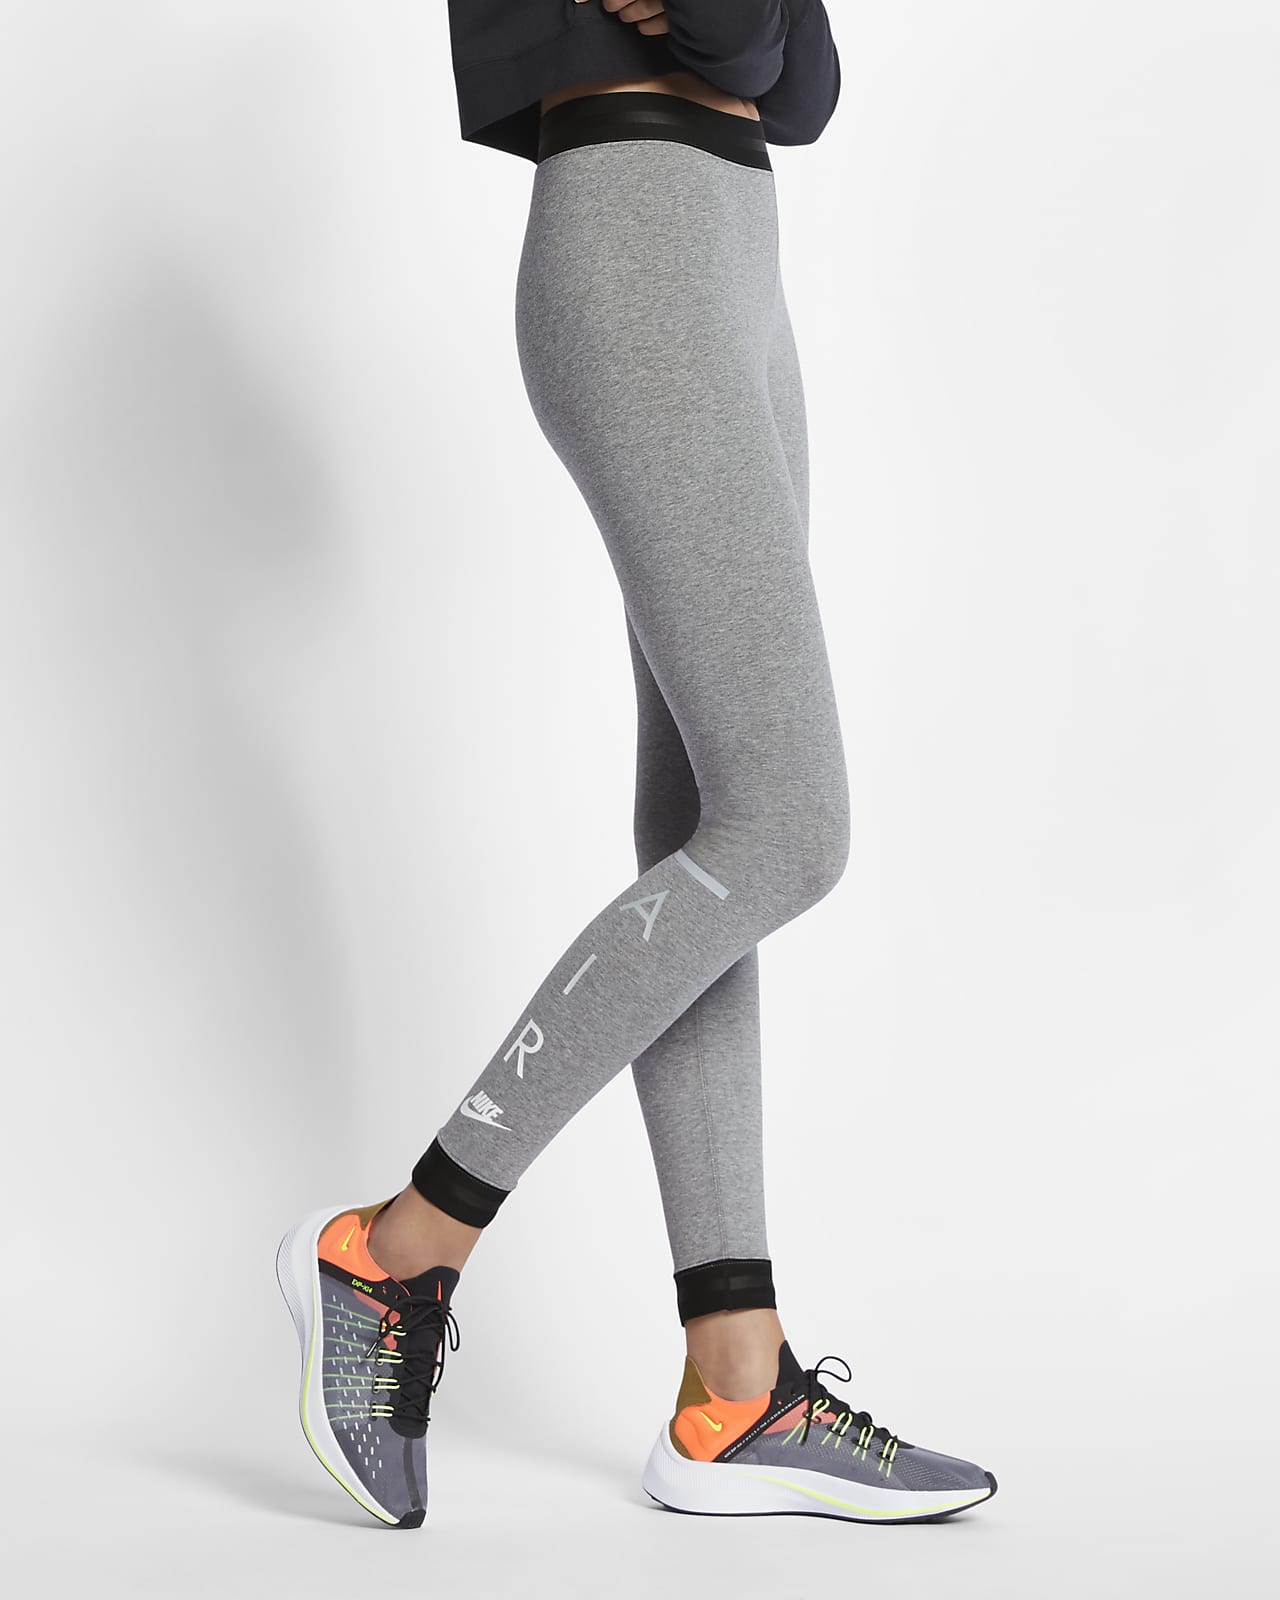 Nike Air Women's High-Waisted Leggings